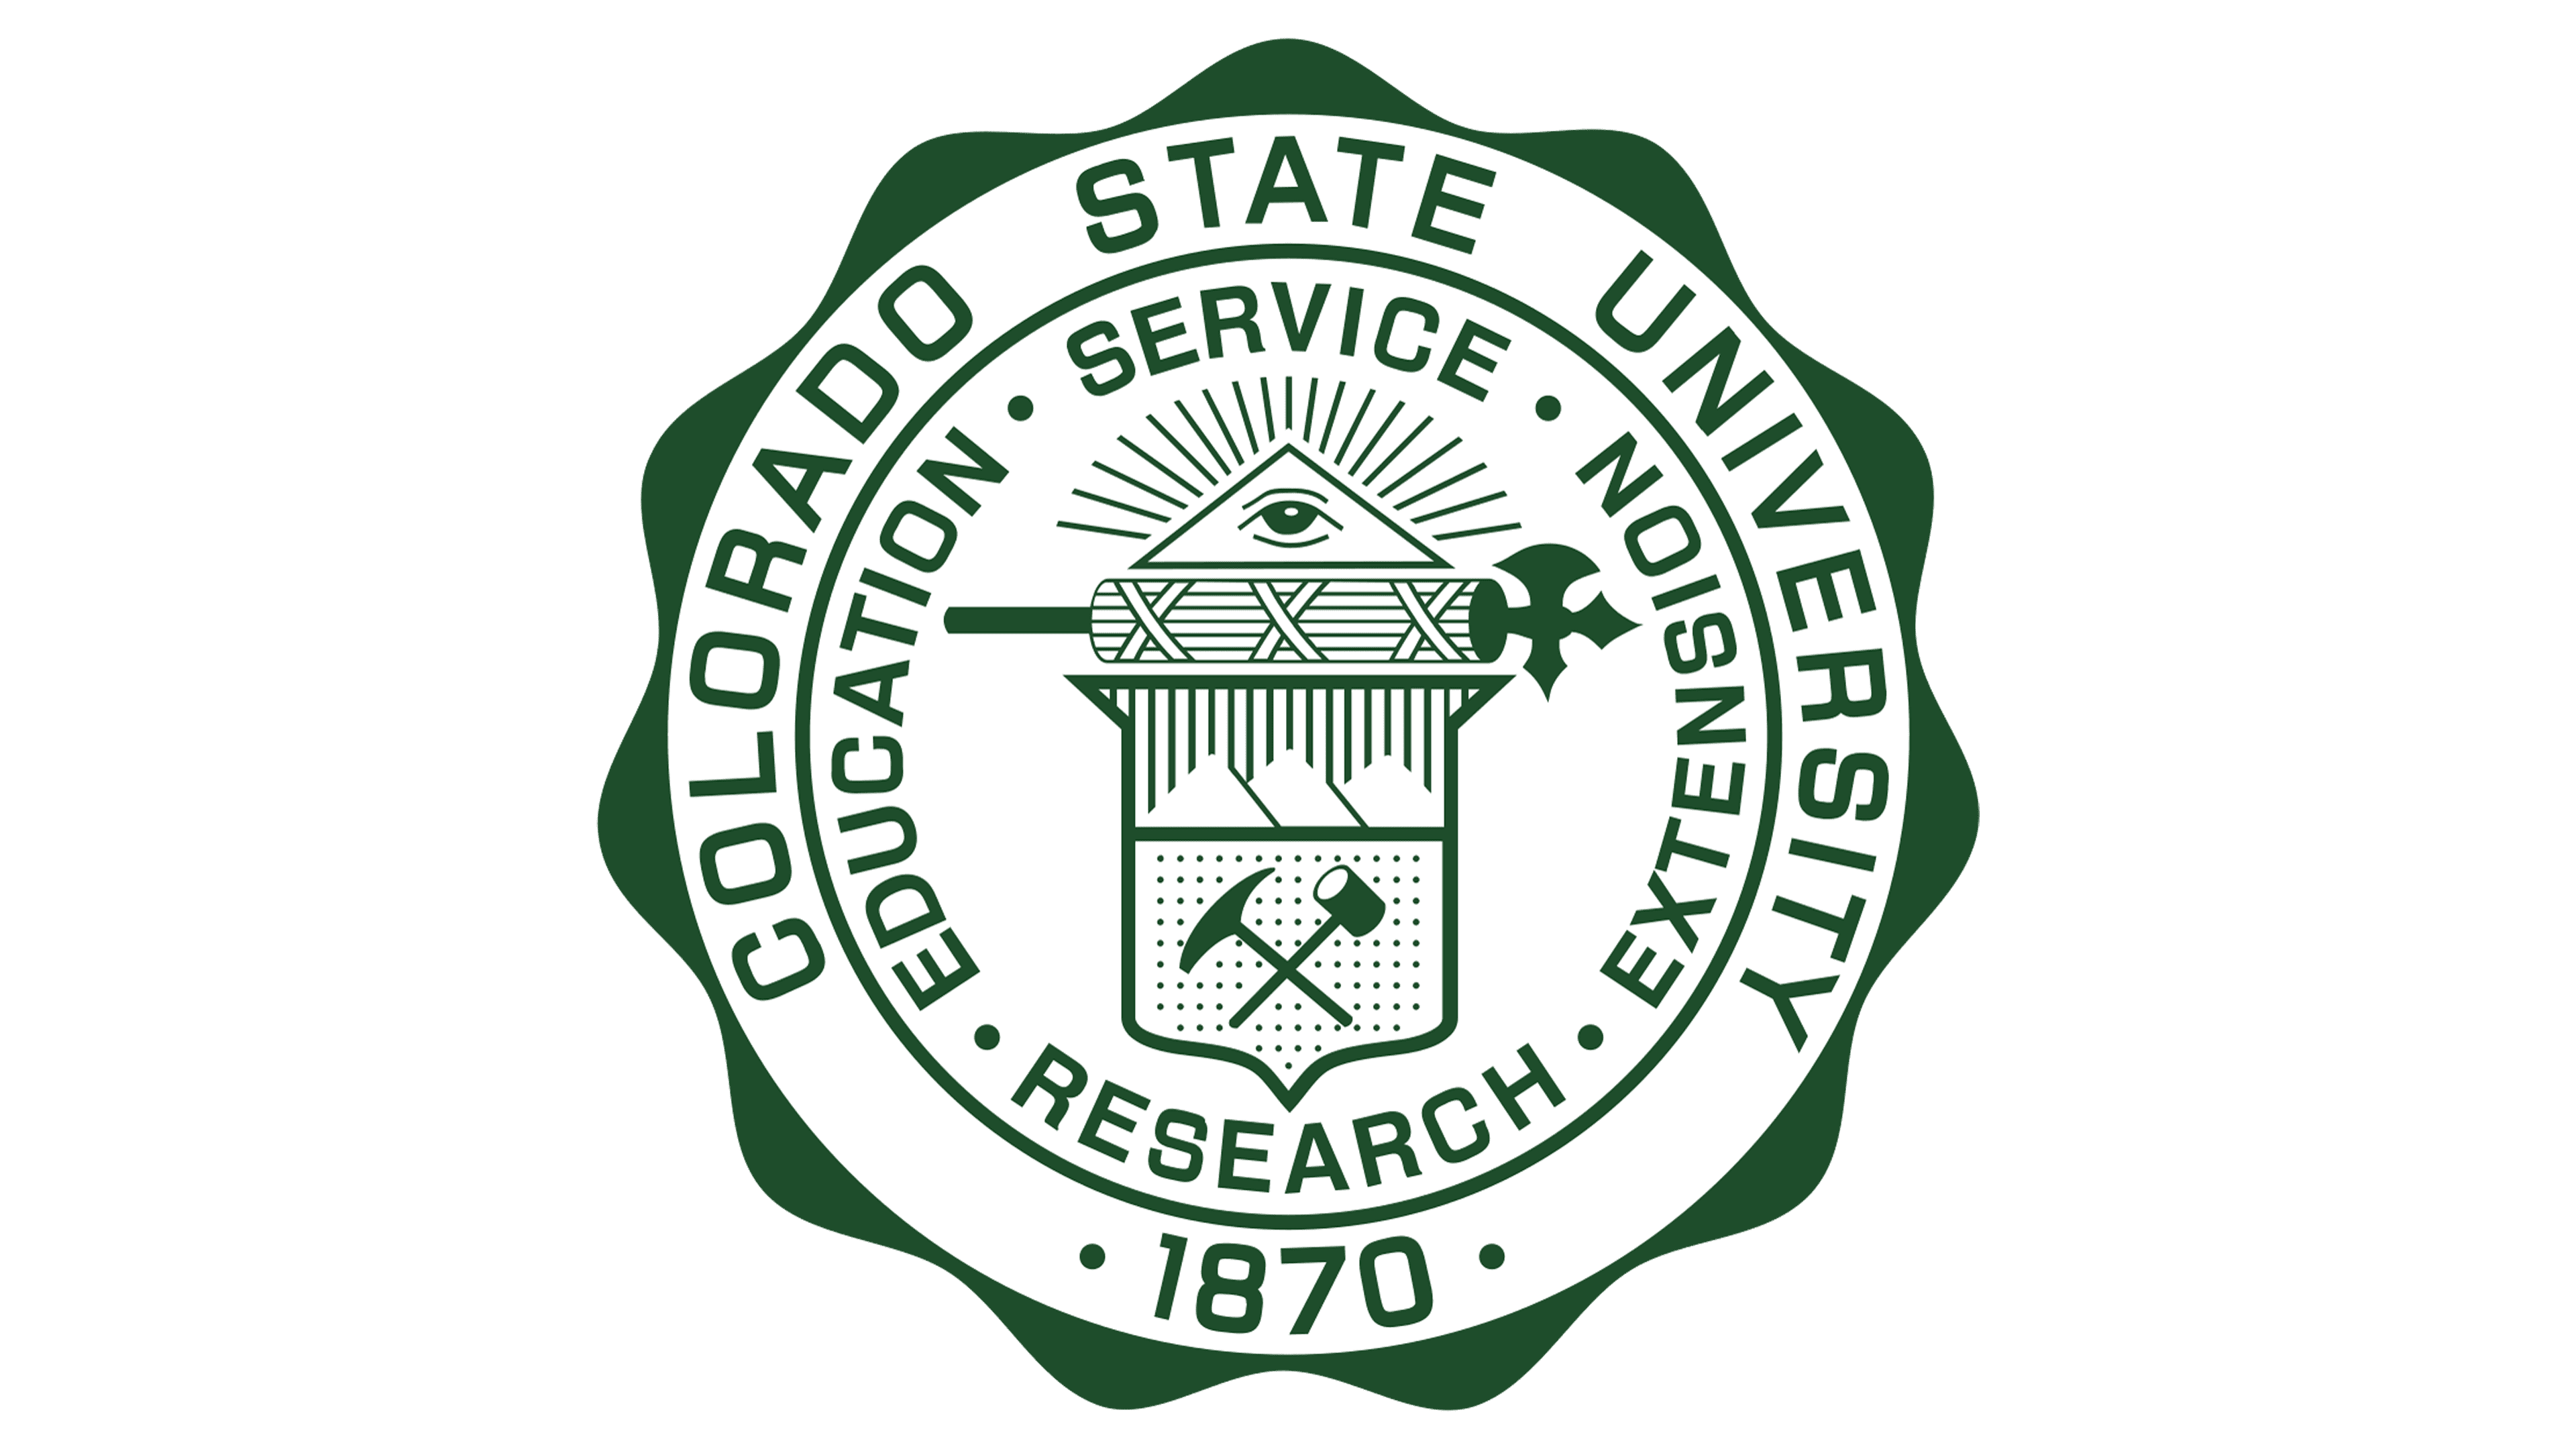 Colorado State University Transparent PNG Logo